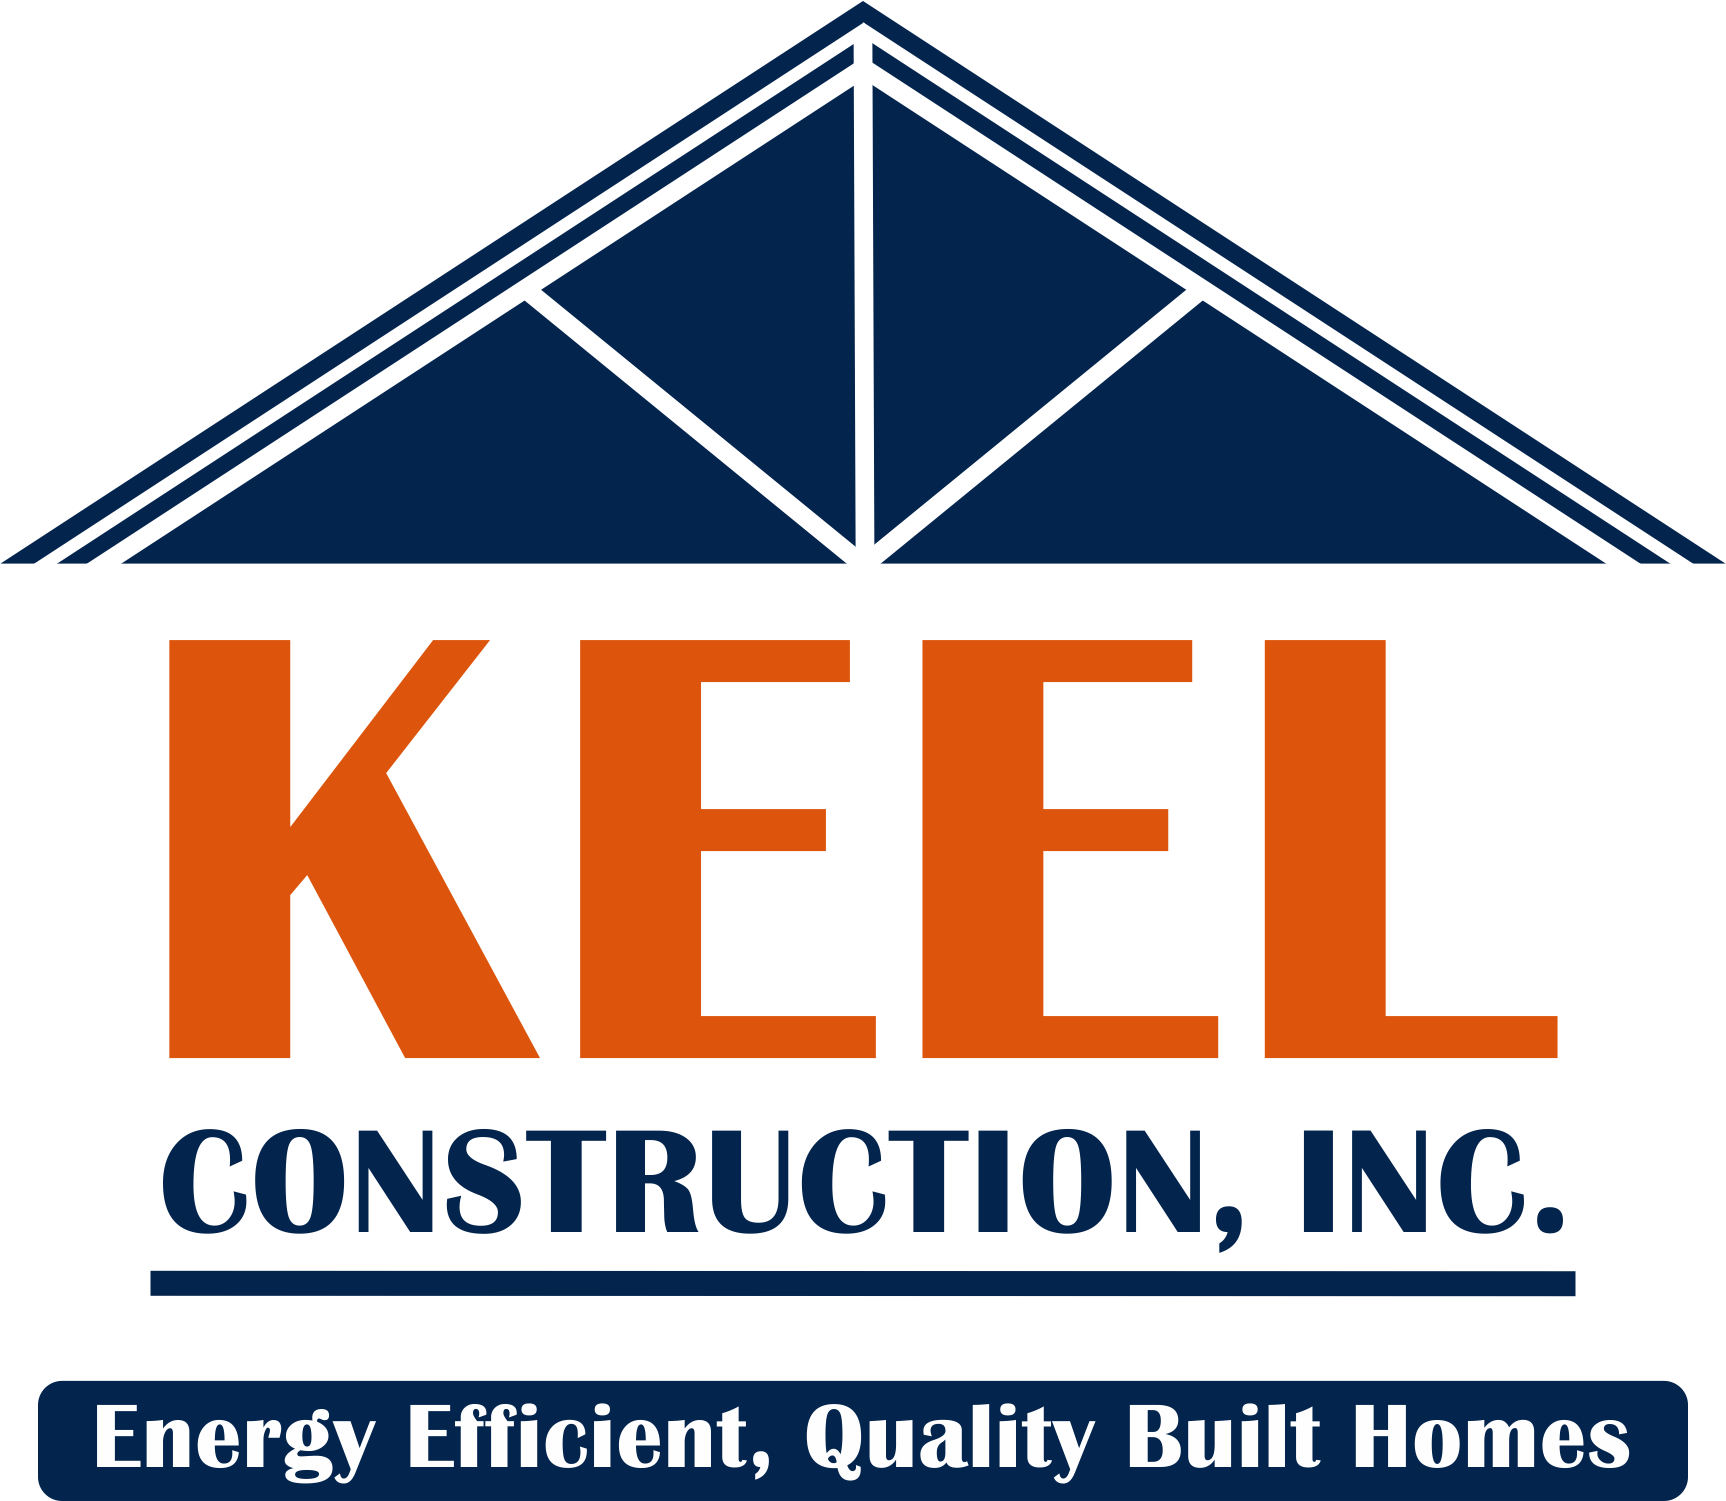 Home Builder for Lake Martin & Auburn Area - Keel Construction